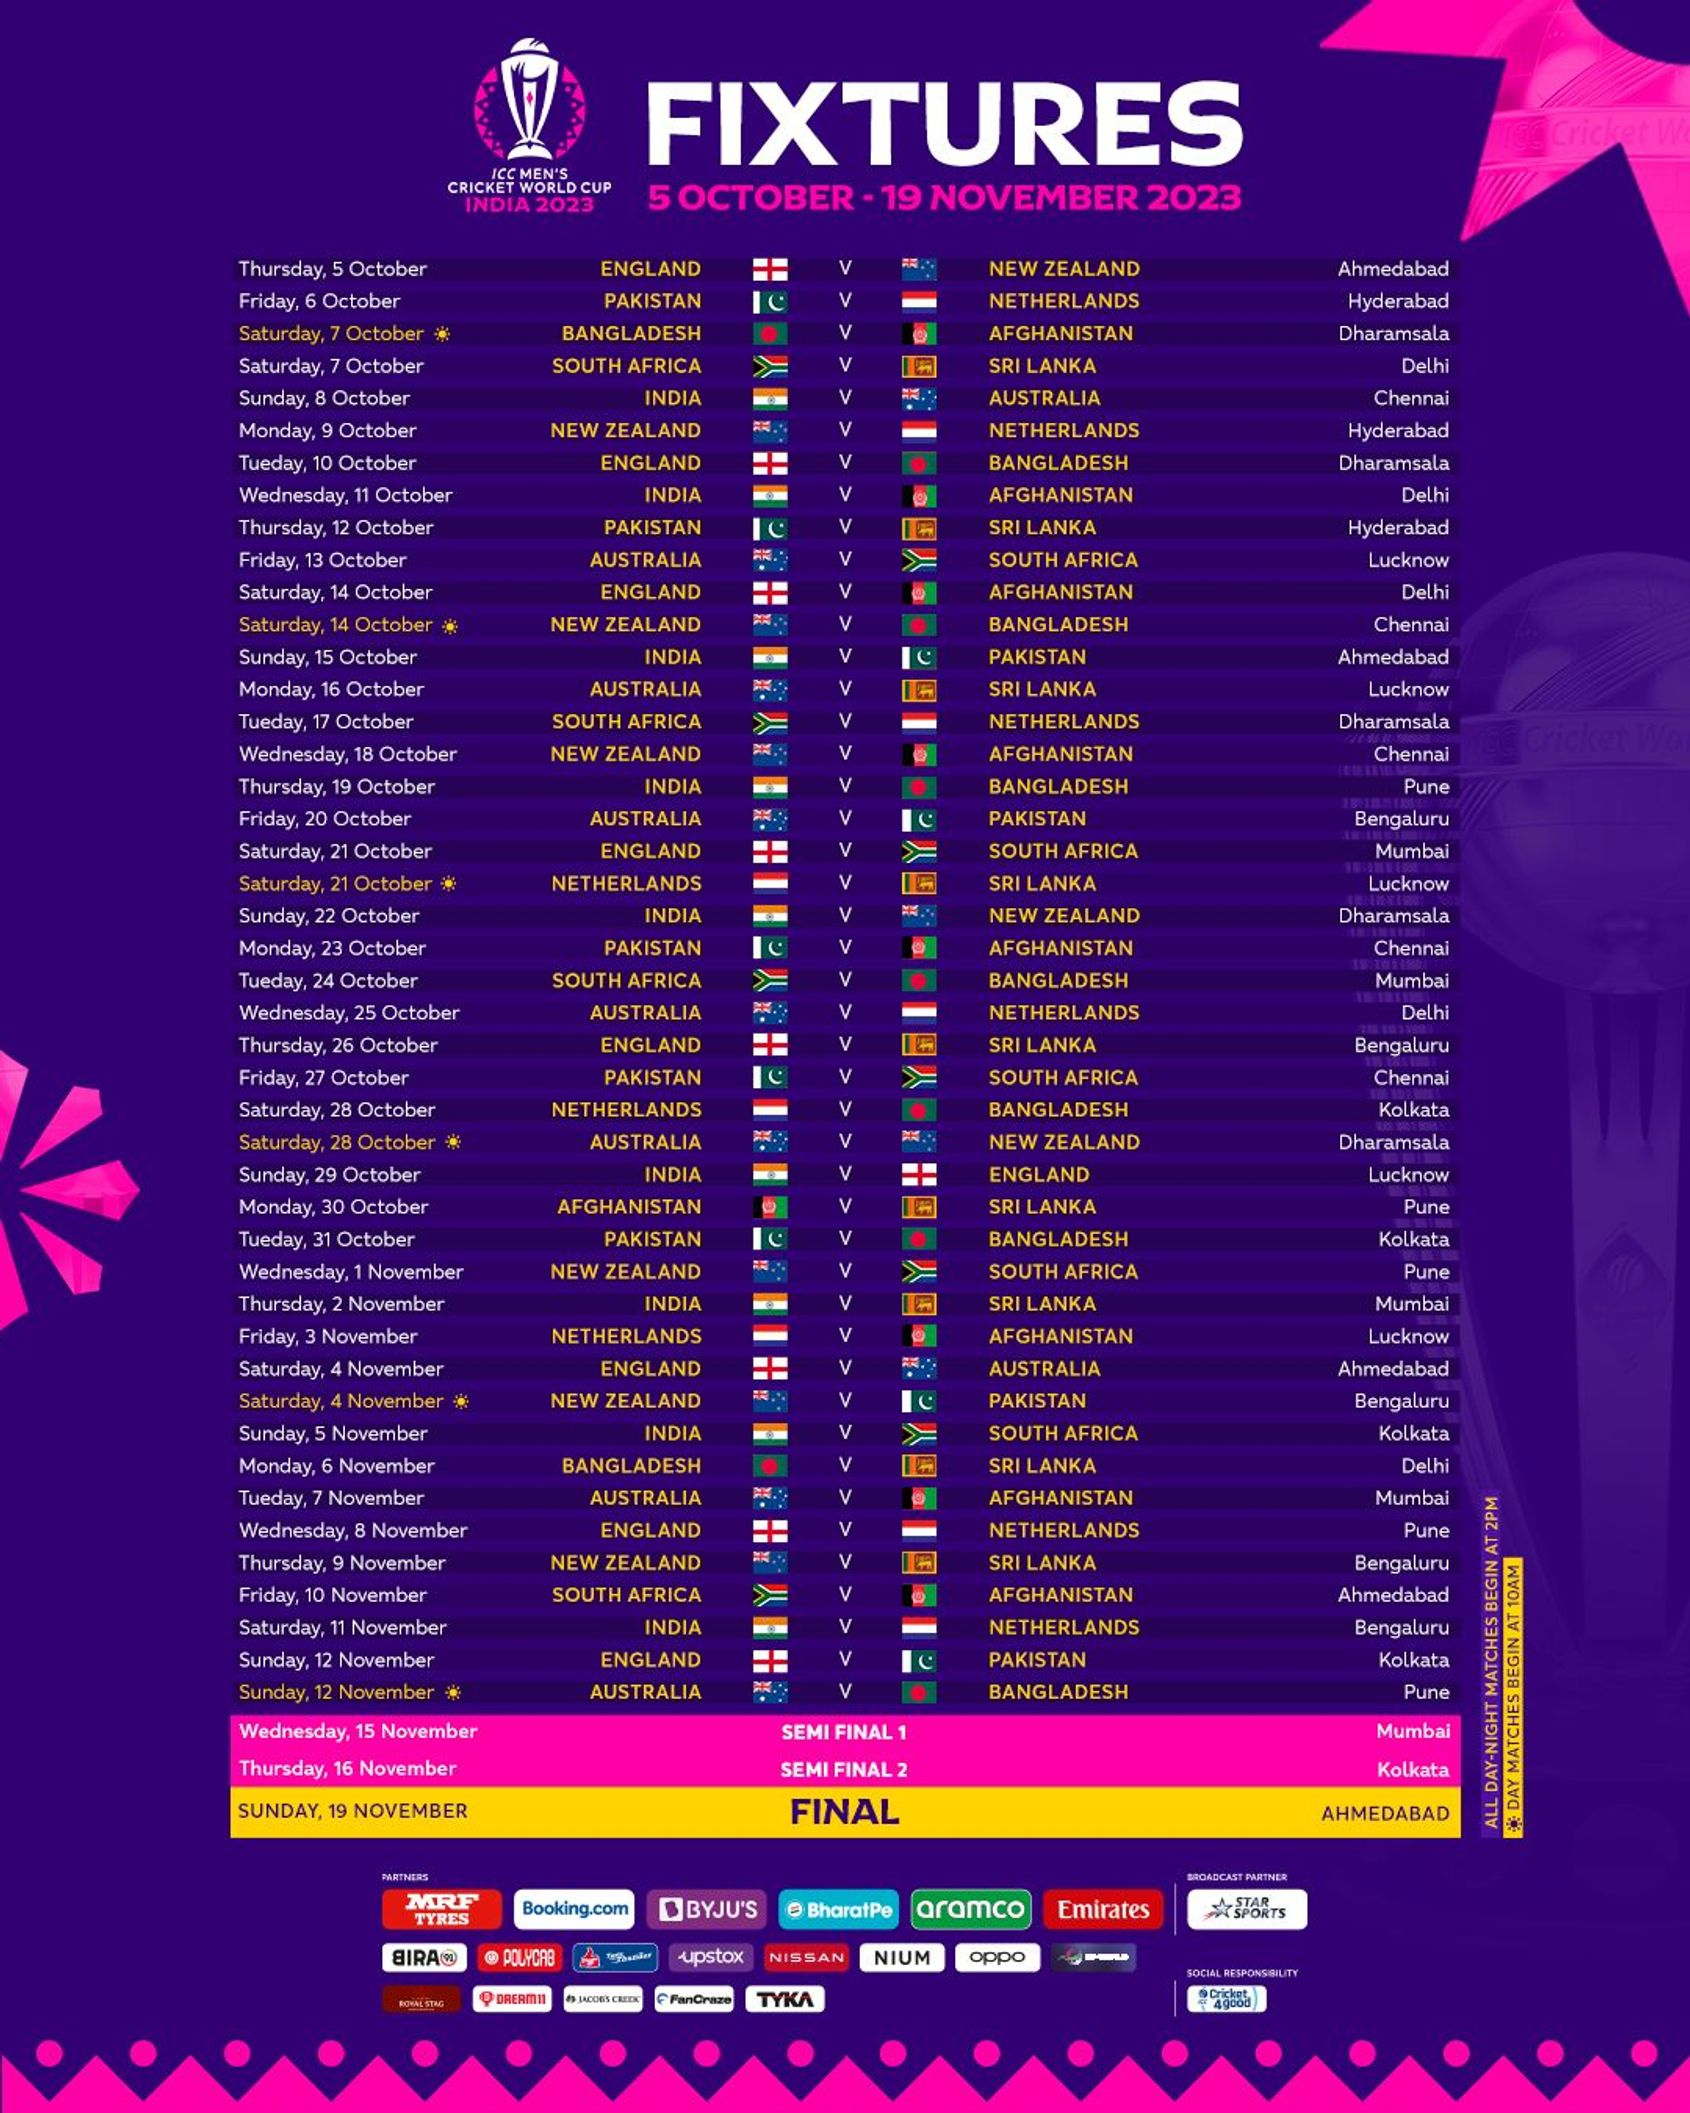 world cup cricket 2023 schedule - ২০২৩ ক্রিকেট বিশ্বকাপ সময়সূচী pdf - ওয়ানডে বিশ্বকাপ ২০২৩ সময়সূচি - world cup cricket 2023 - বিশ্বকাপ ক্রিকেট ২০২৩ ফিকচার